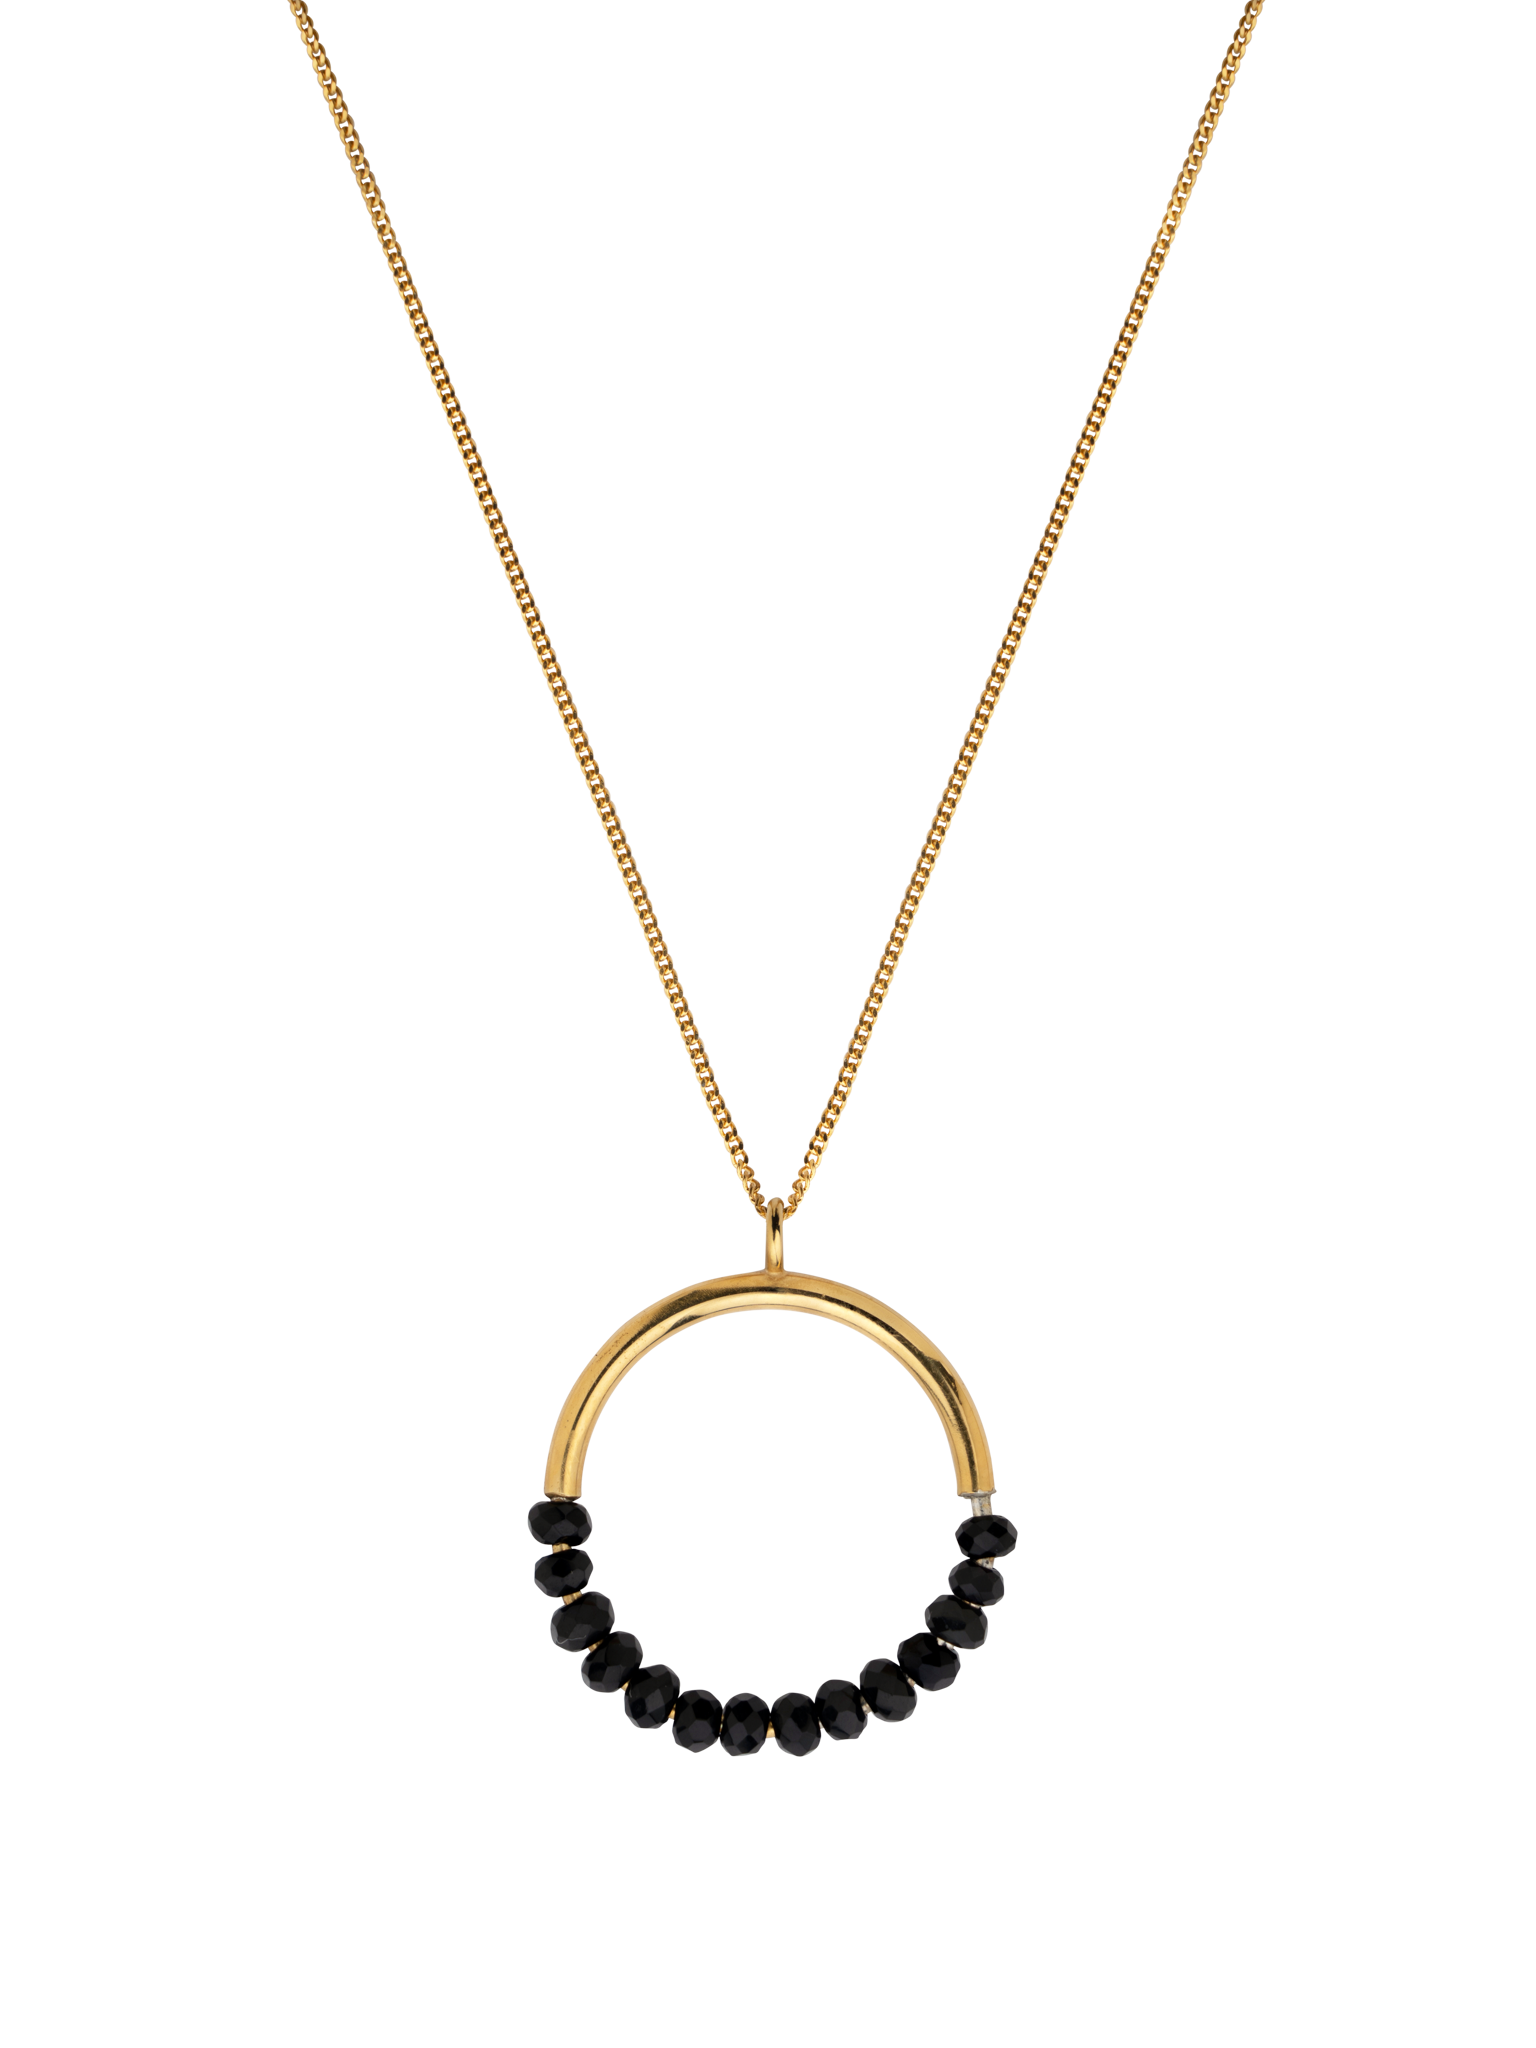 Black spinel halo necklace